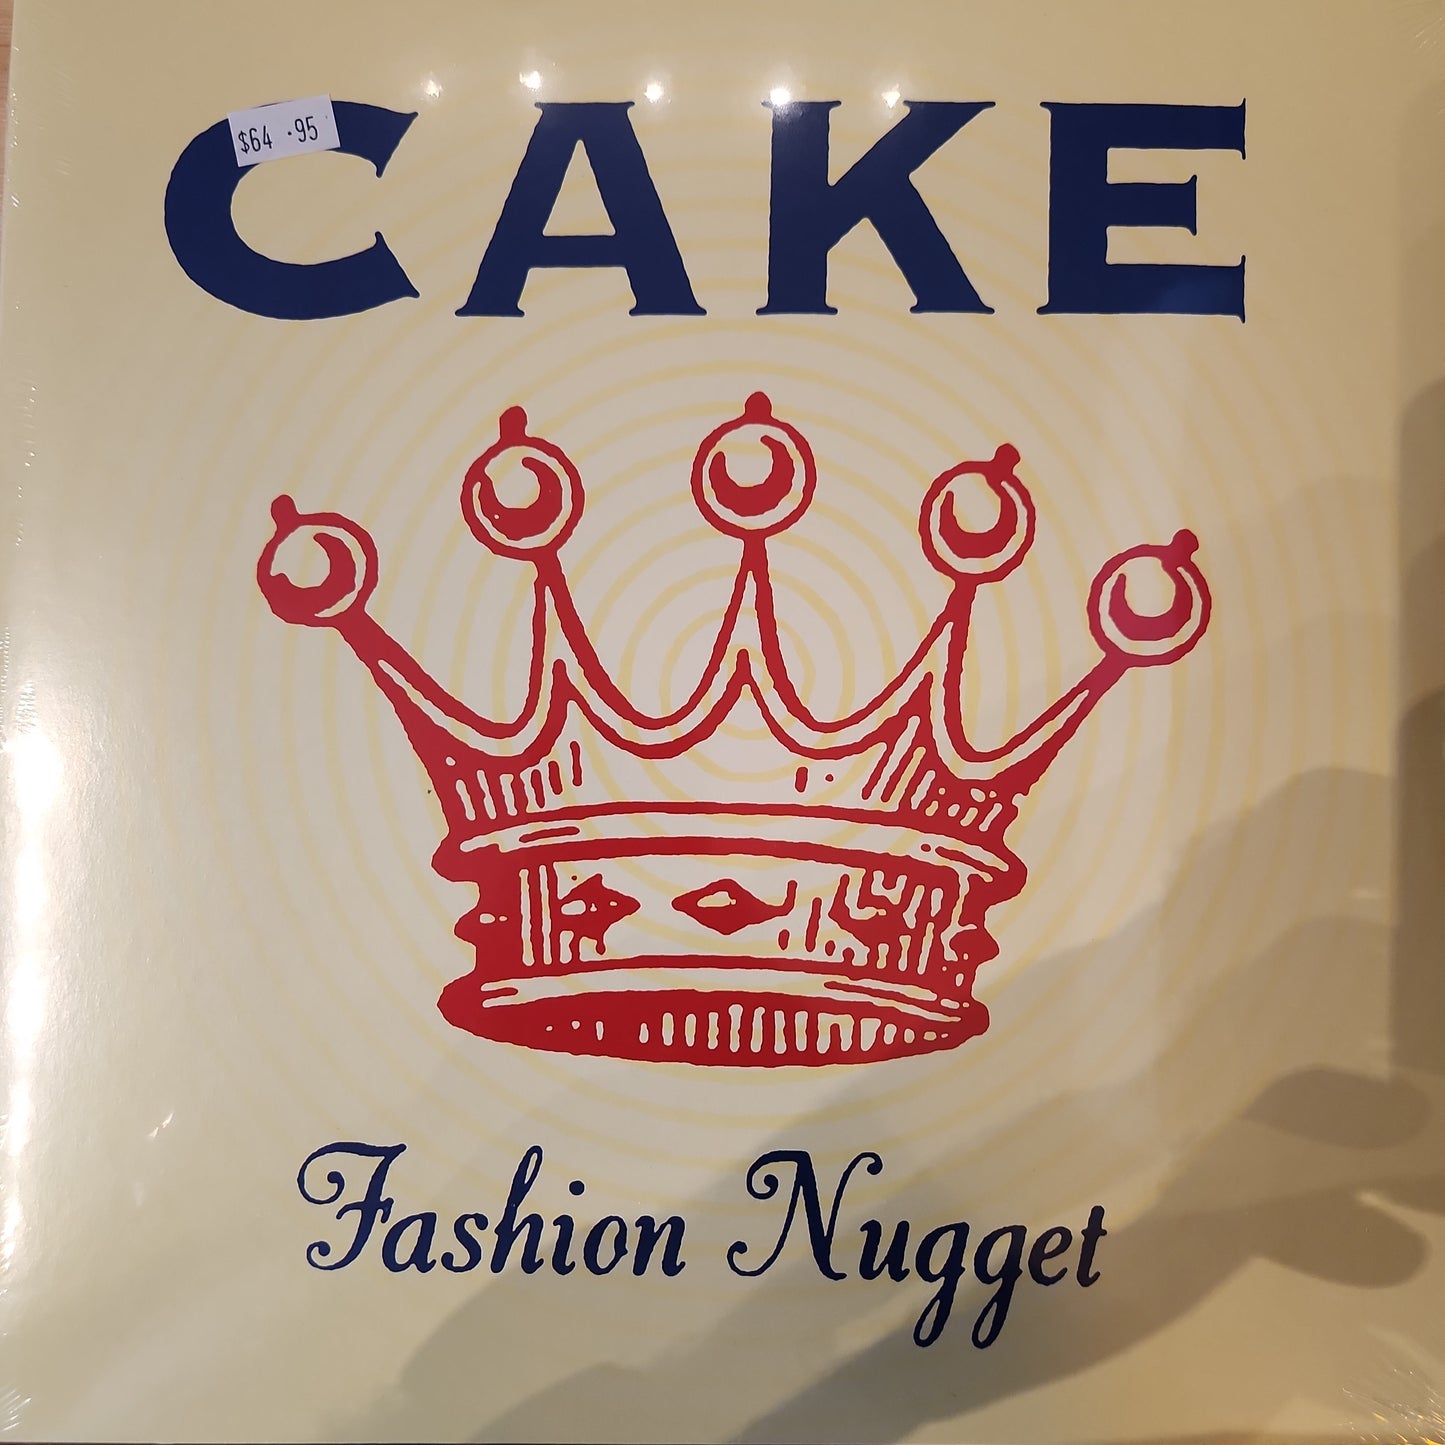 Cake - Fashion Nugget - Vinyl LP